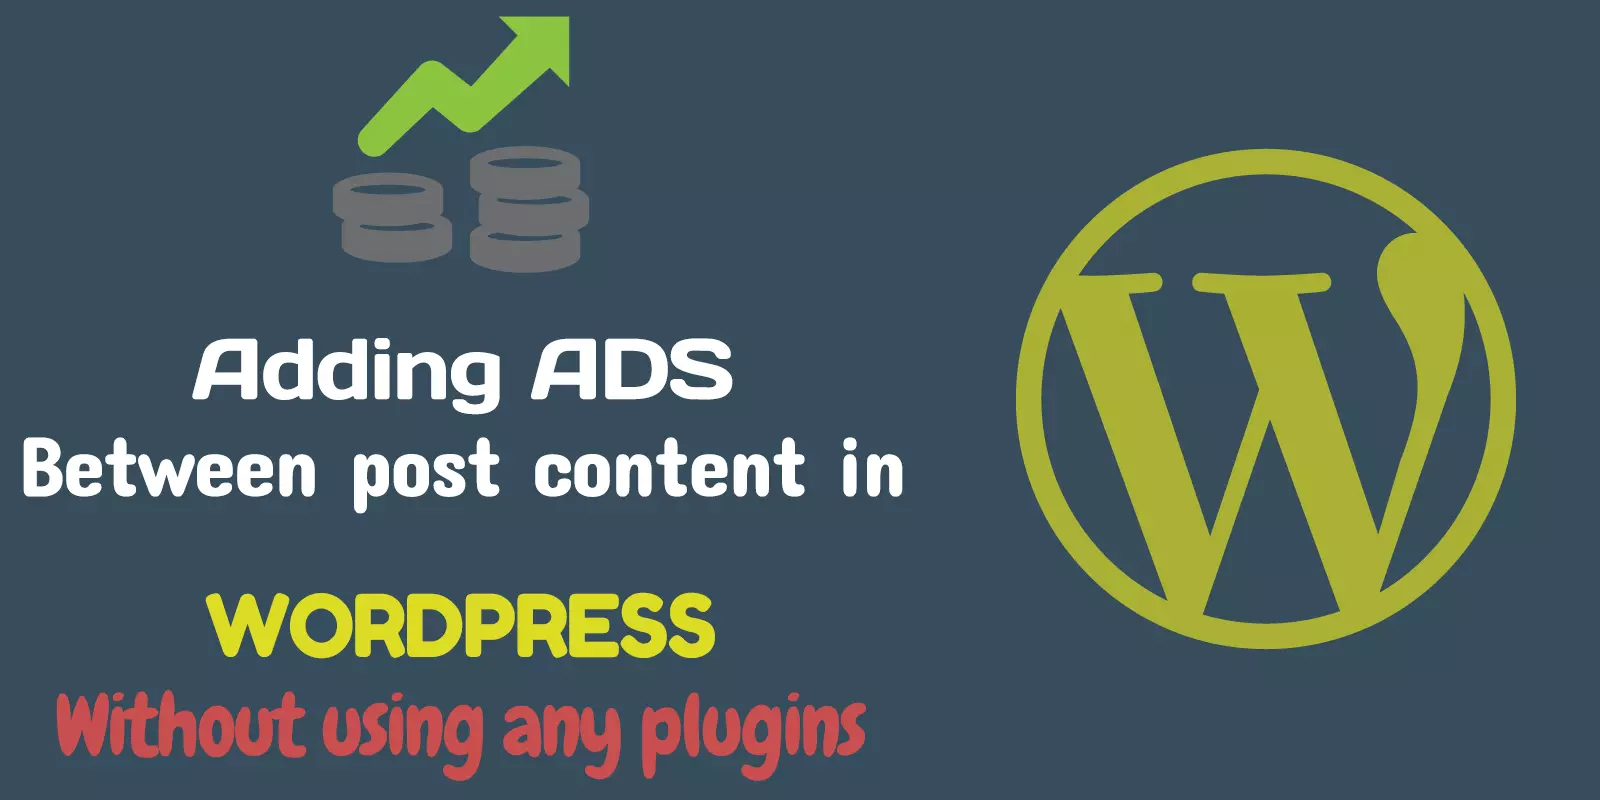 Adding ADS between WordPress Post Contents